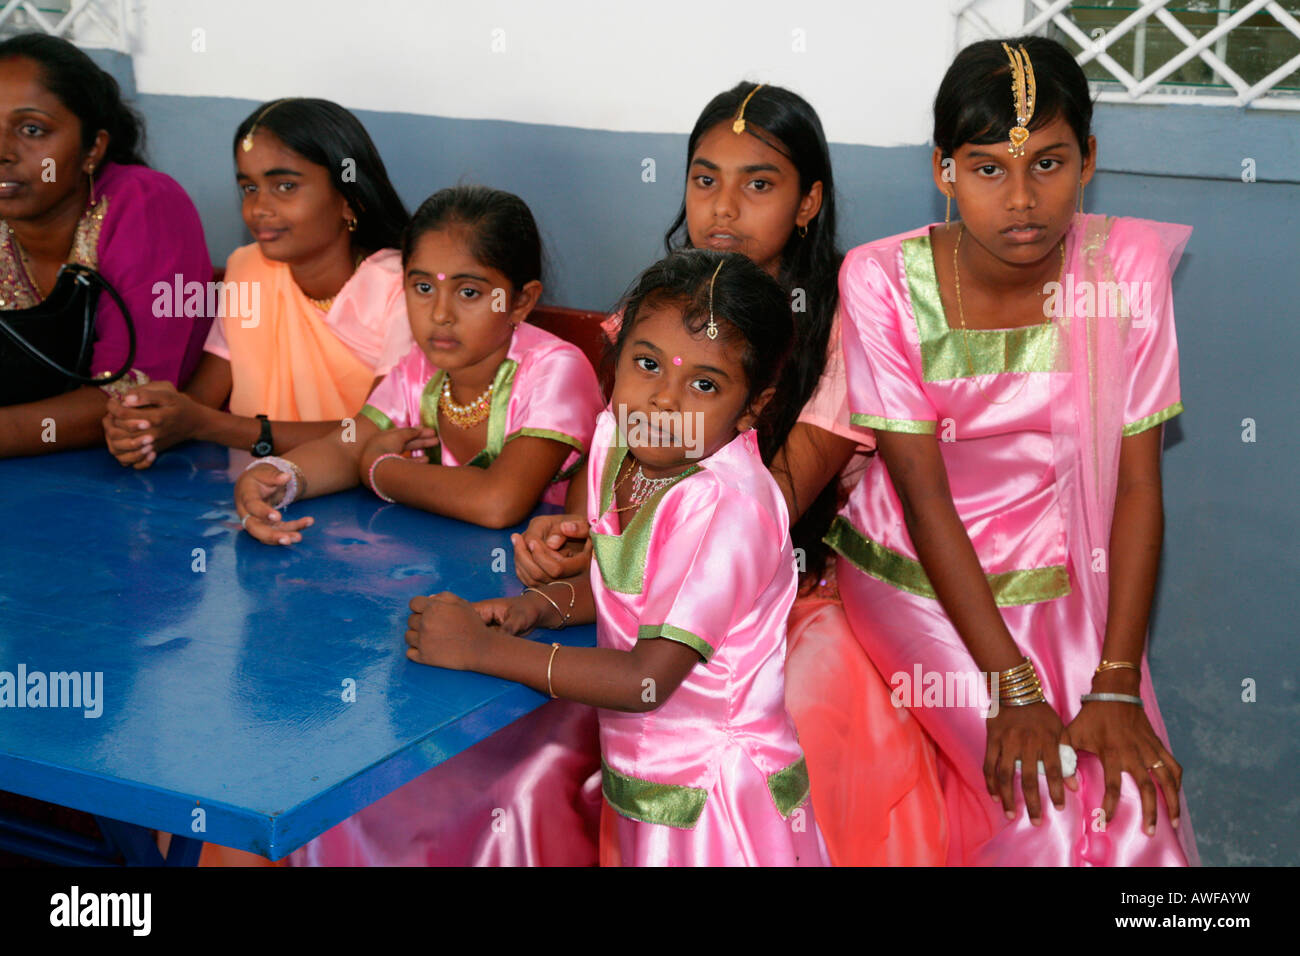 girls-of-indian-ethnicity-at-a-hindu-festival-in-georgetown-guyana-AWFAYW.jpg